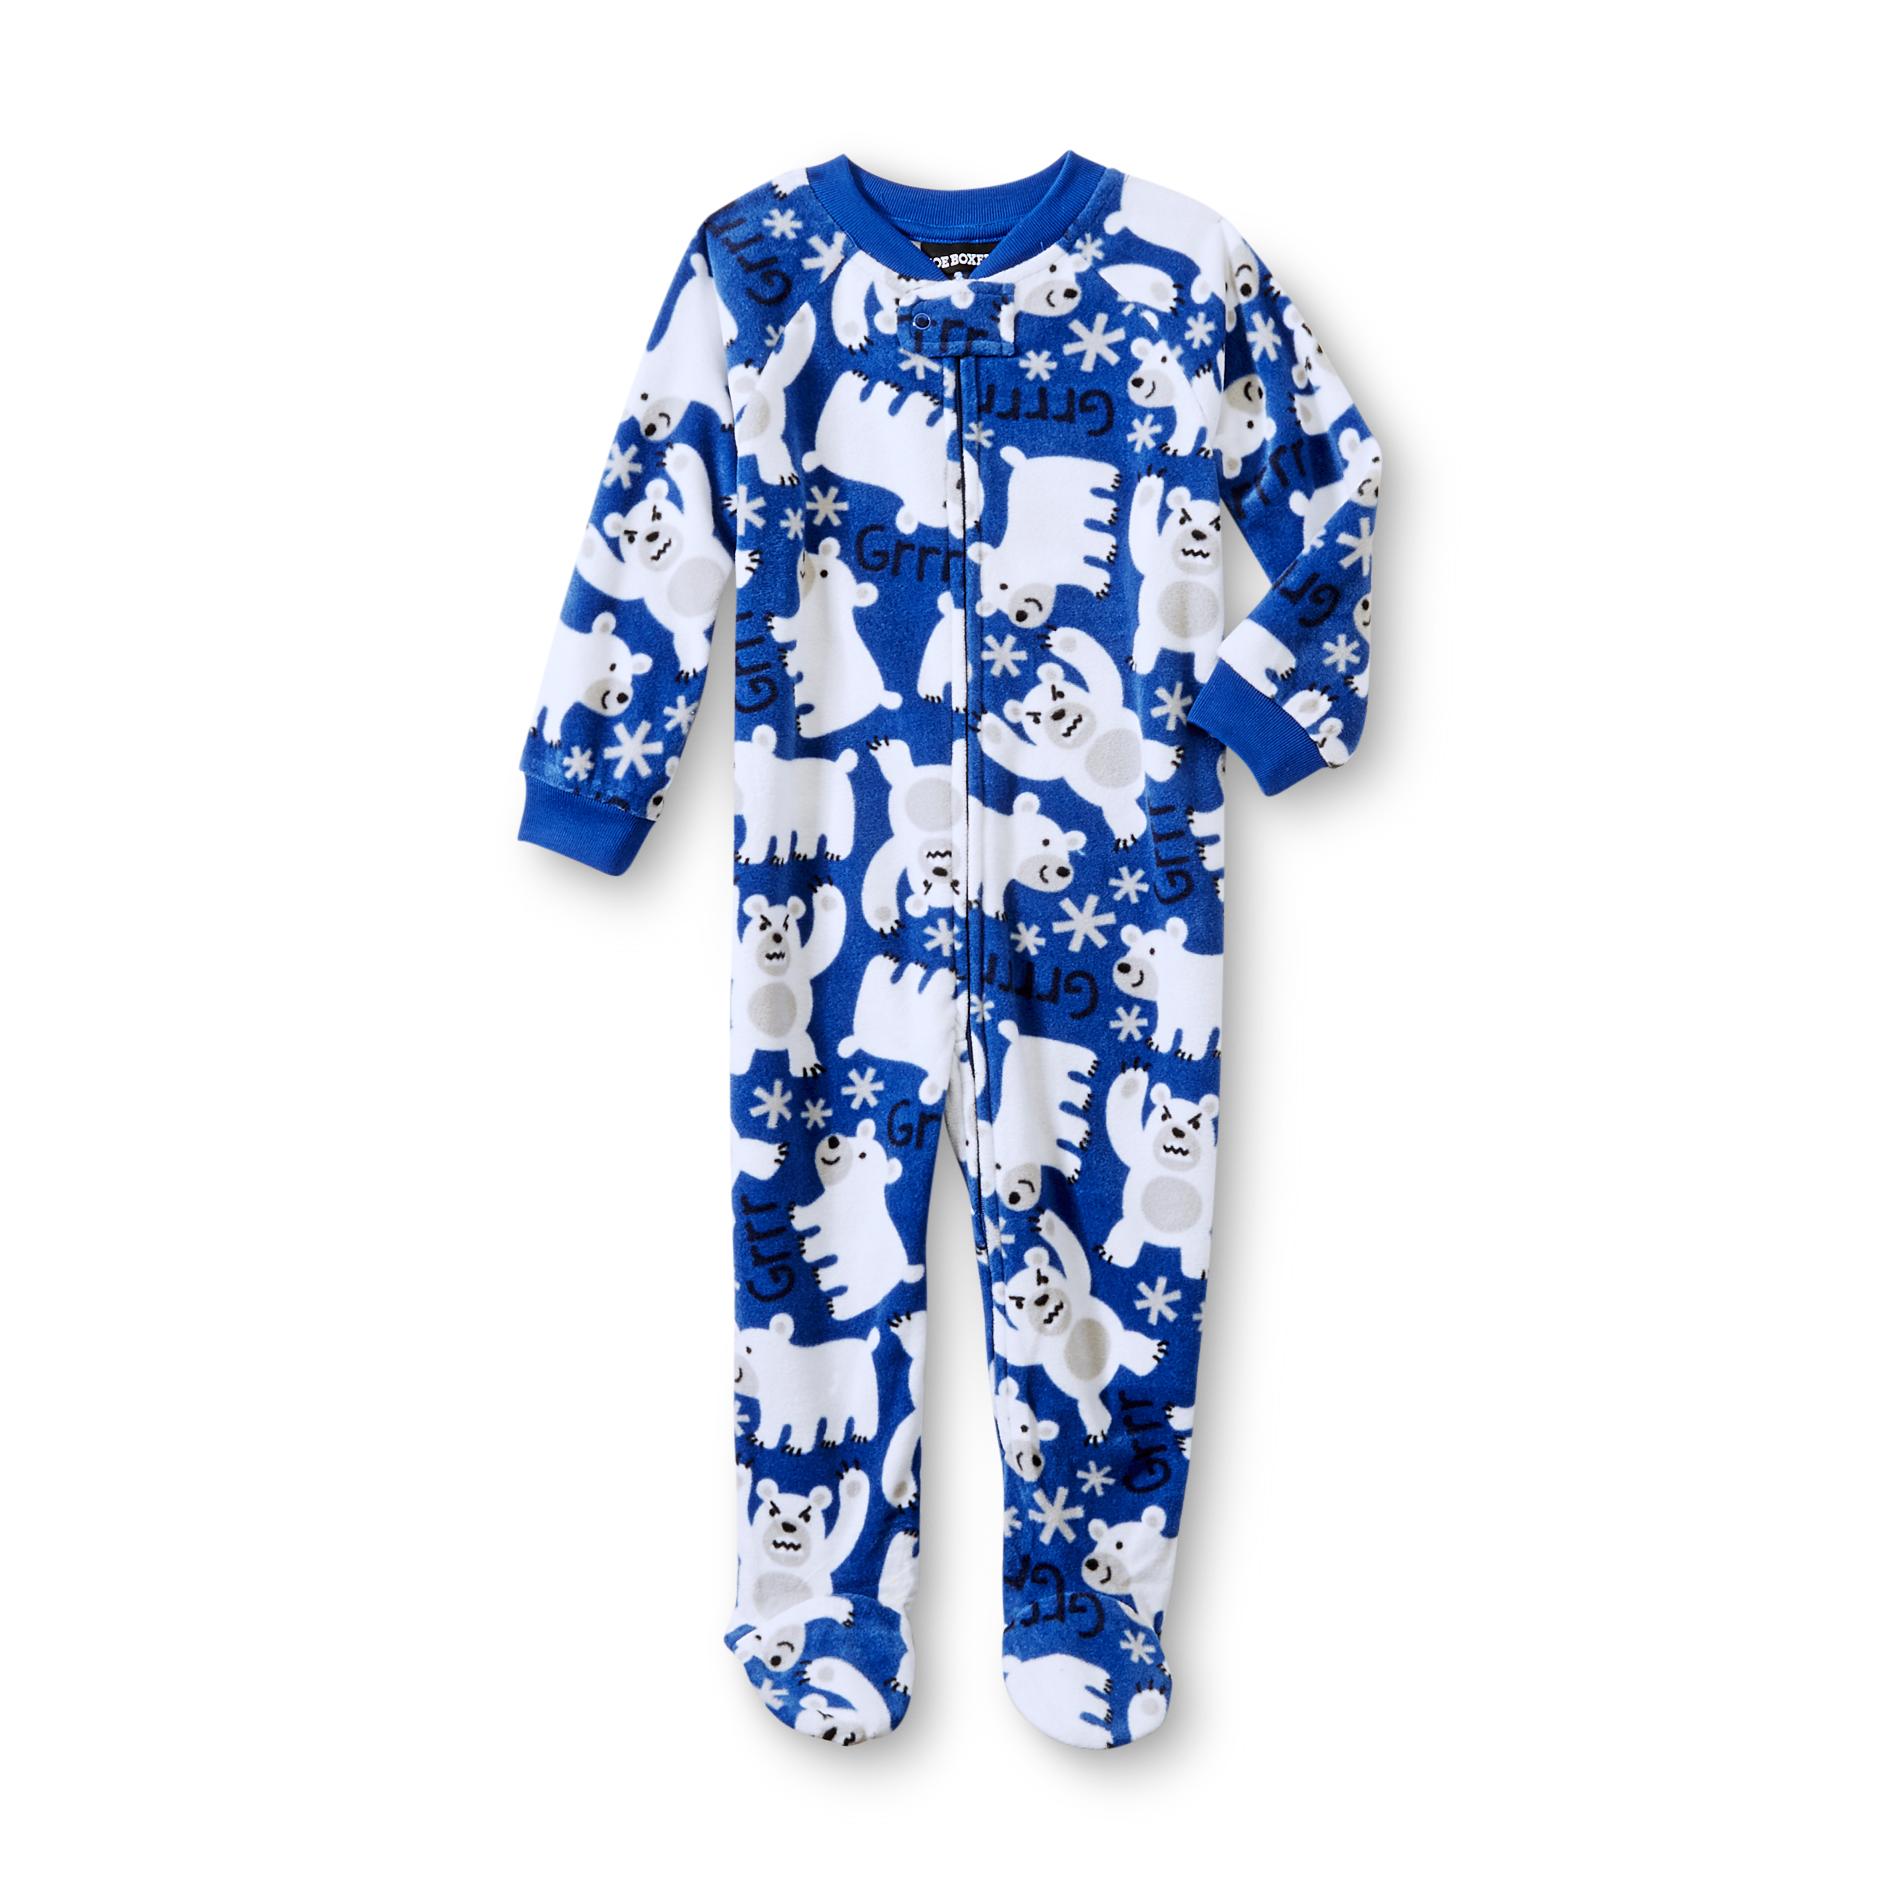 Joe Boxer Infant & Toddler Boy's Fleece Sleeper Pajamas - Polar Bears